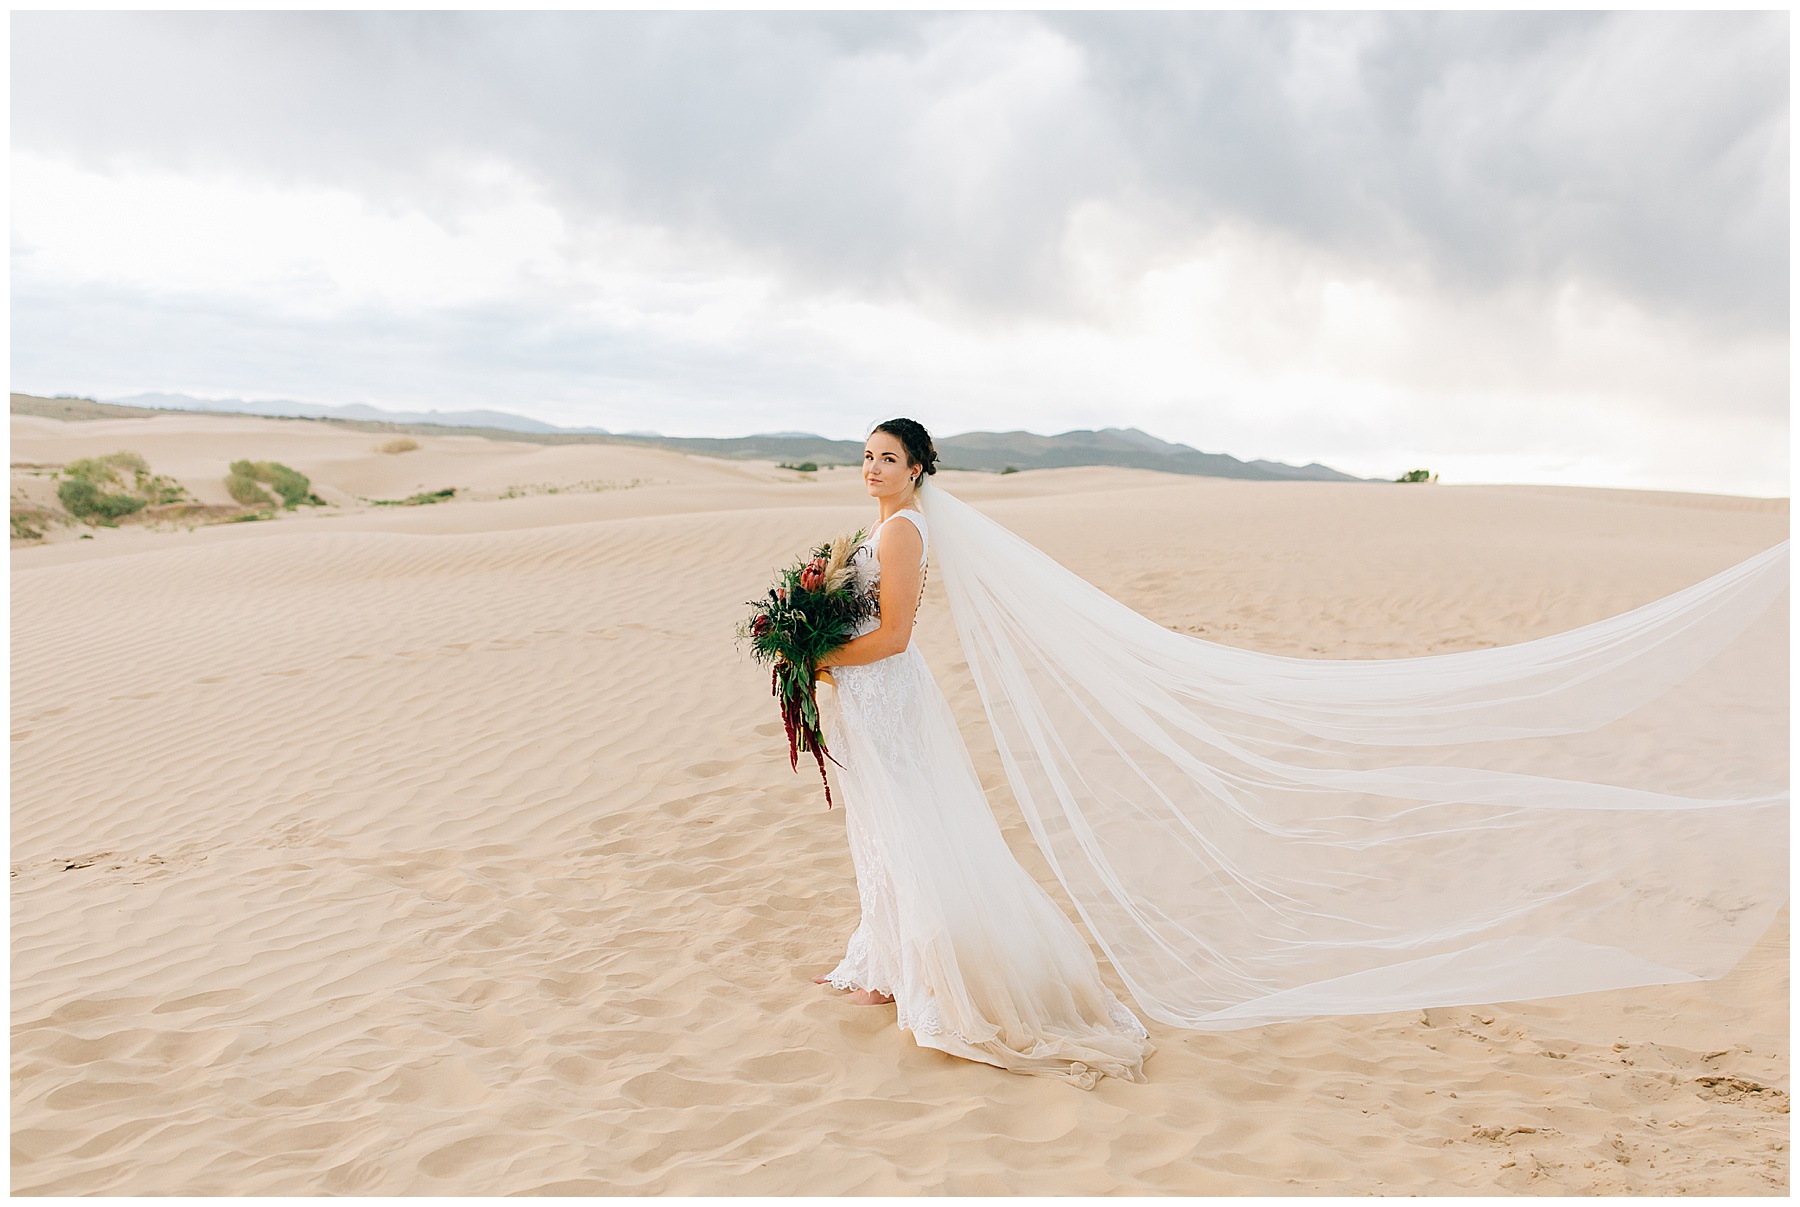 Kassy | Little Sahara Sand Dunes Bridals | Taco Bell Bride Buy a Wedding Dress in Utah